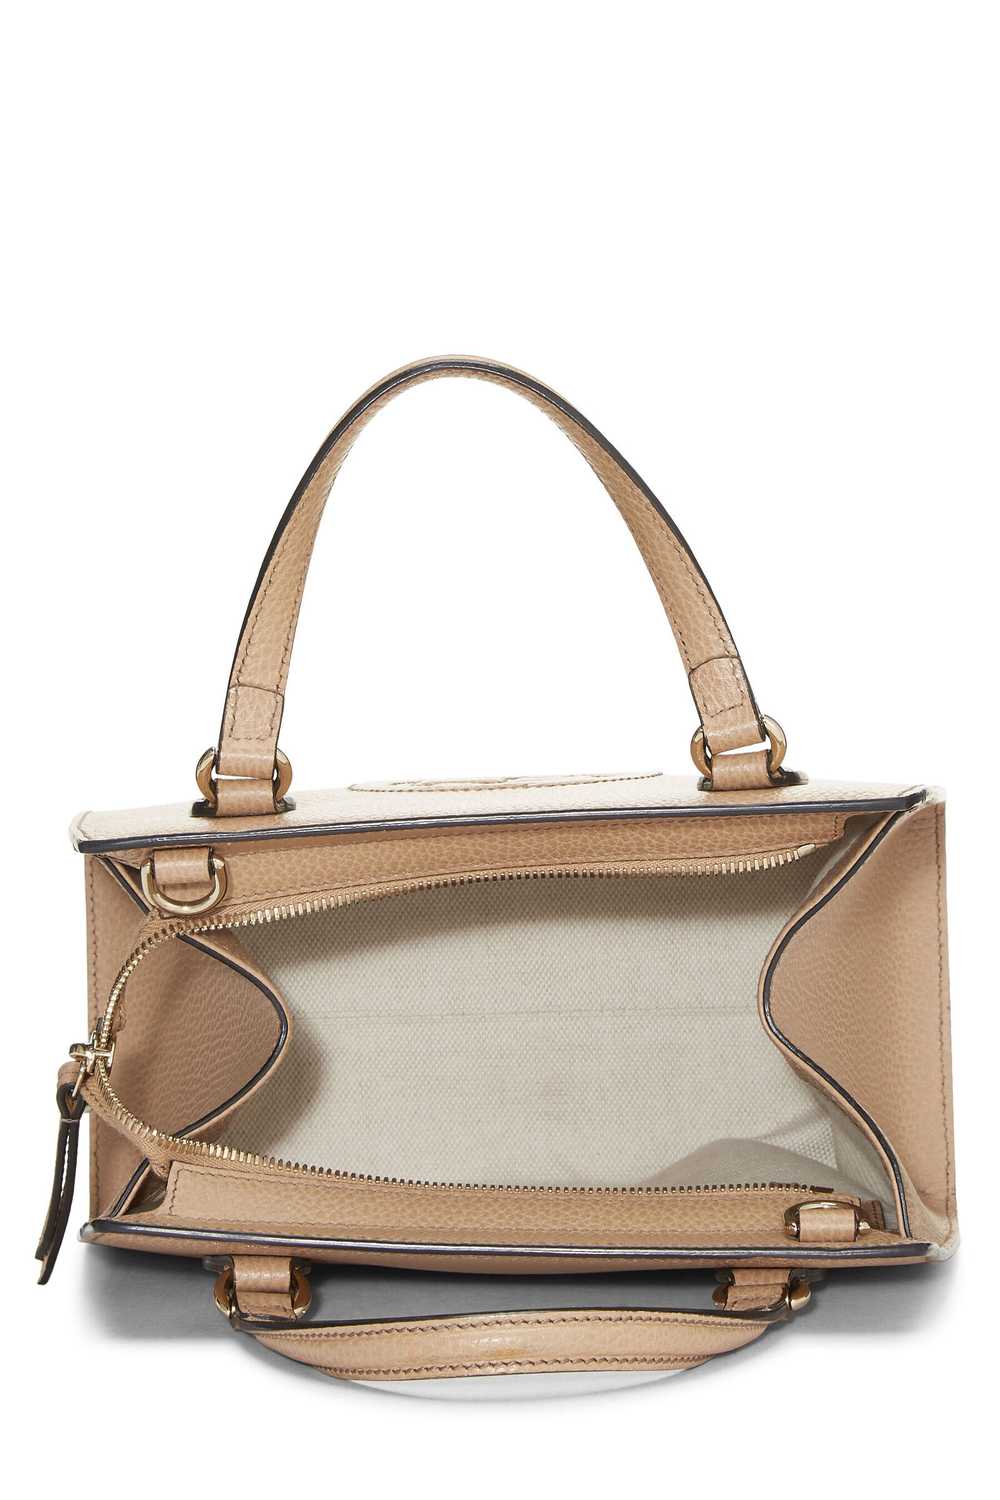 Beige Grained Leather Soho Handbag - image 6